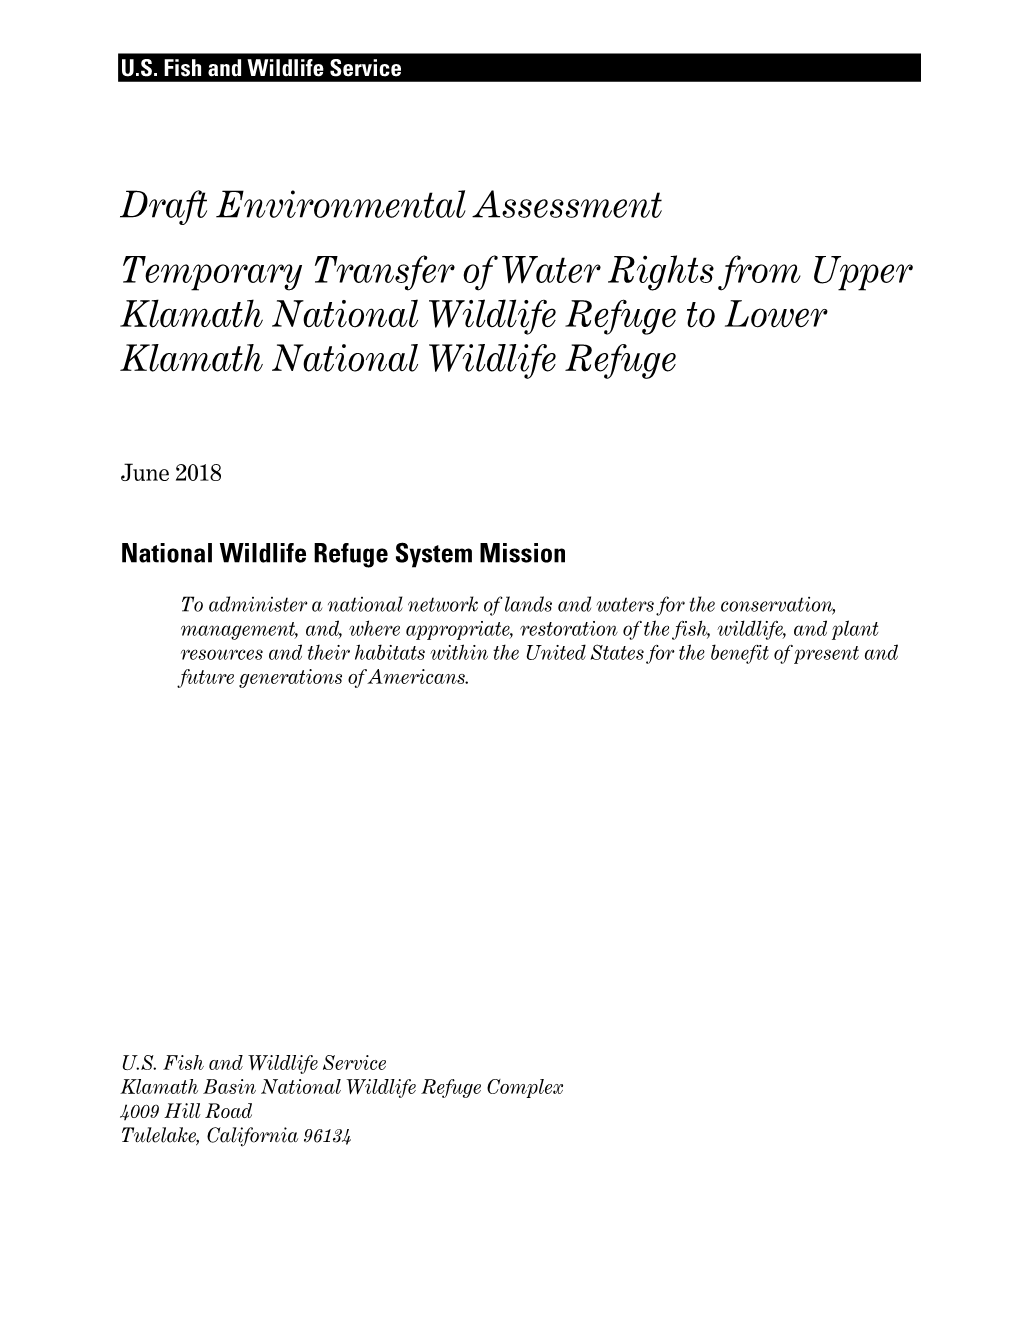 Draft Environmental Assessment Temporary Transfer of Water Rights from Upper Klamath National Wildlife Refuge to Lower Klamath National Wildlife Refuge